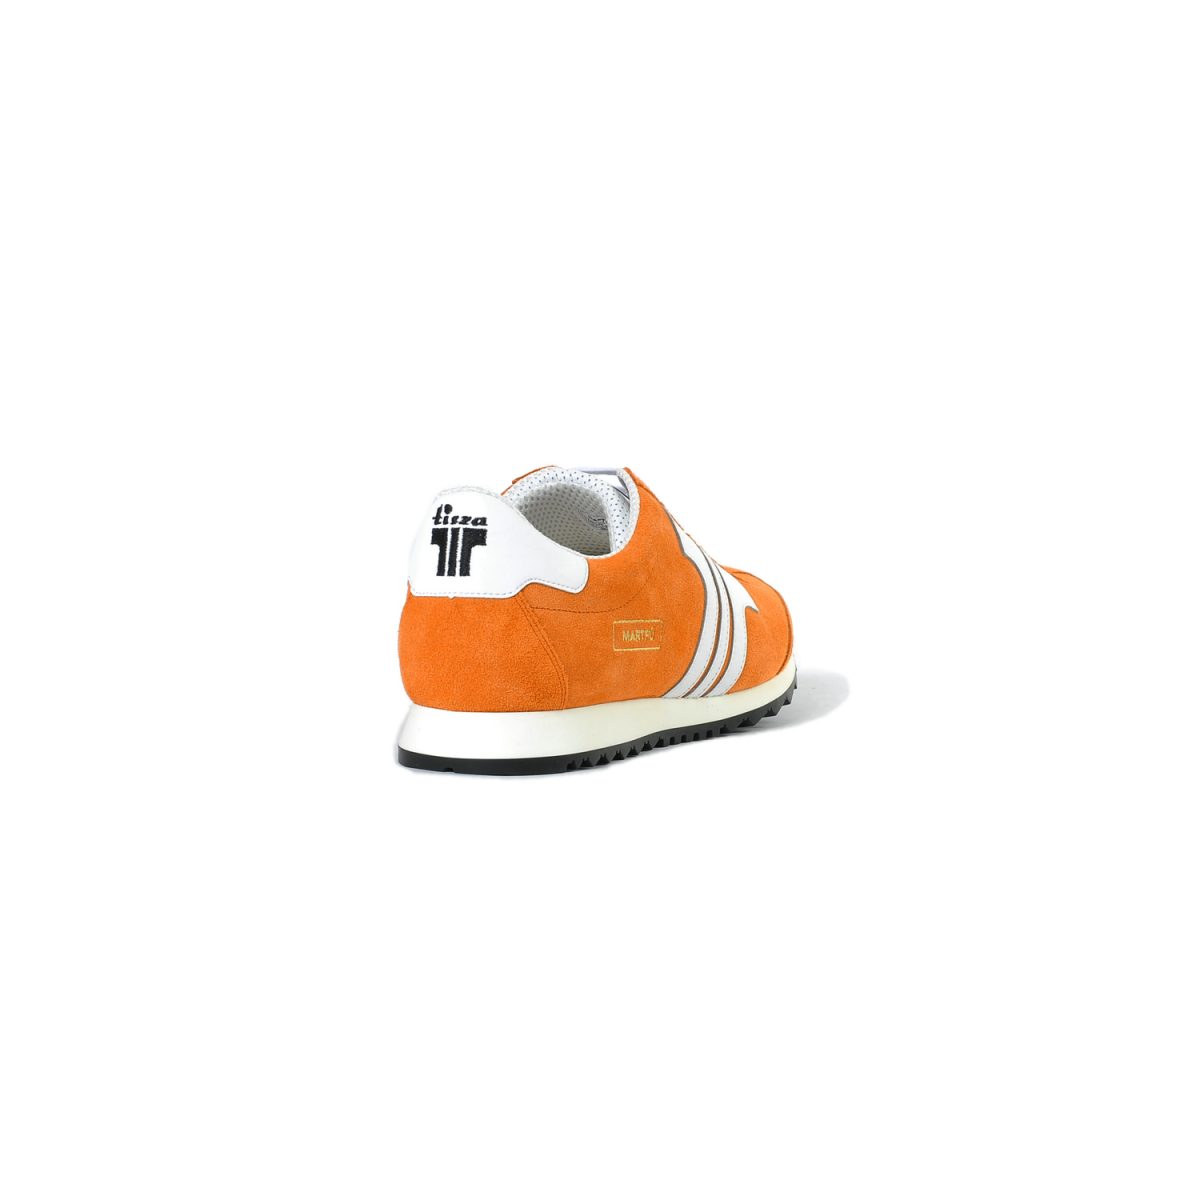 Tisza cipő - Martfű - Narancs-fehér